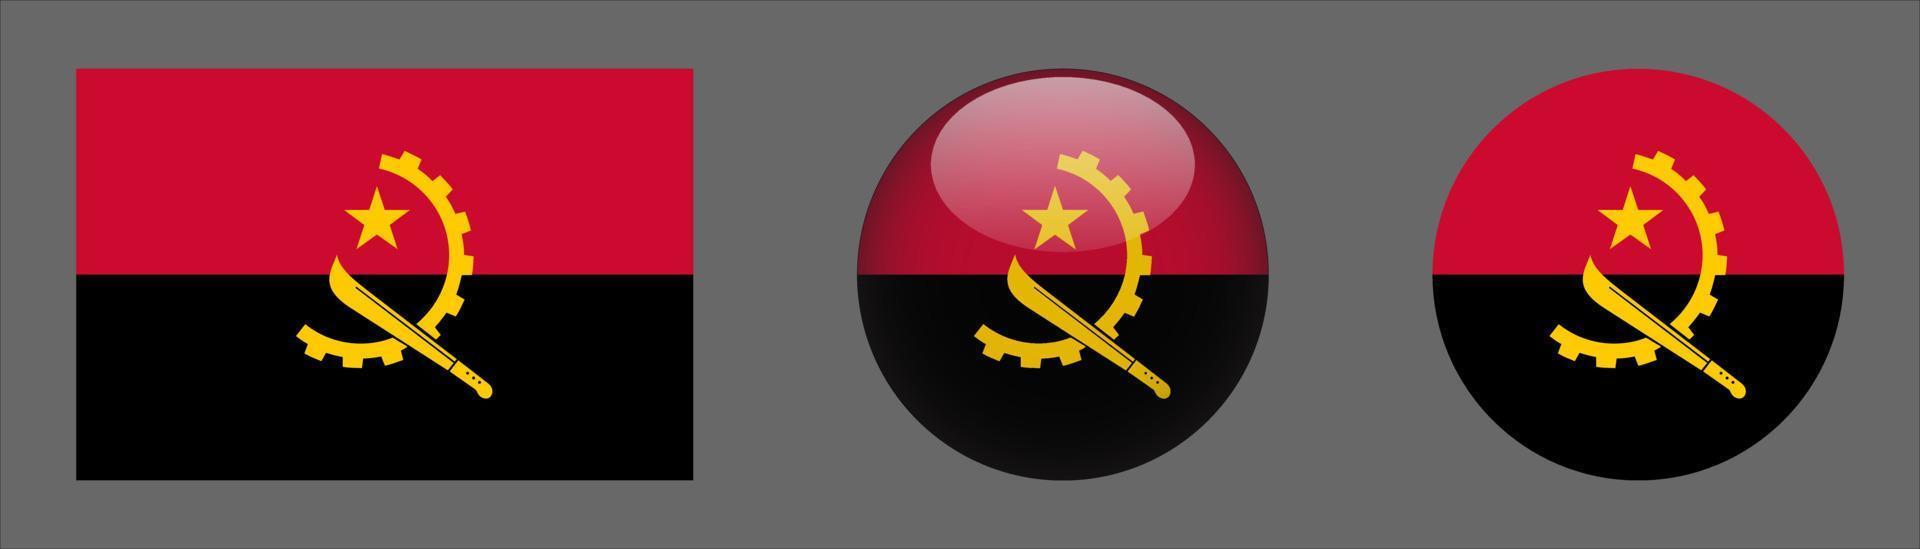 Angola Flag Set Collection, Original vector